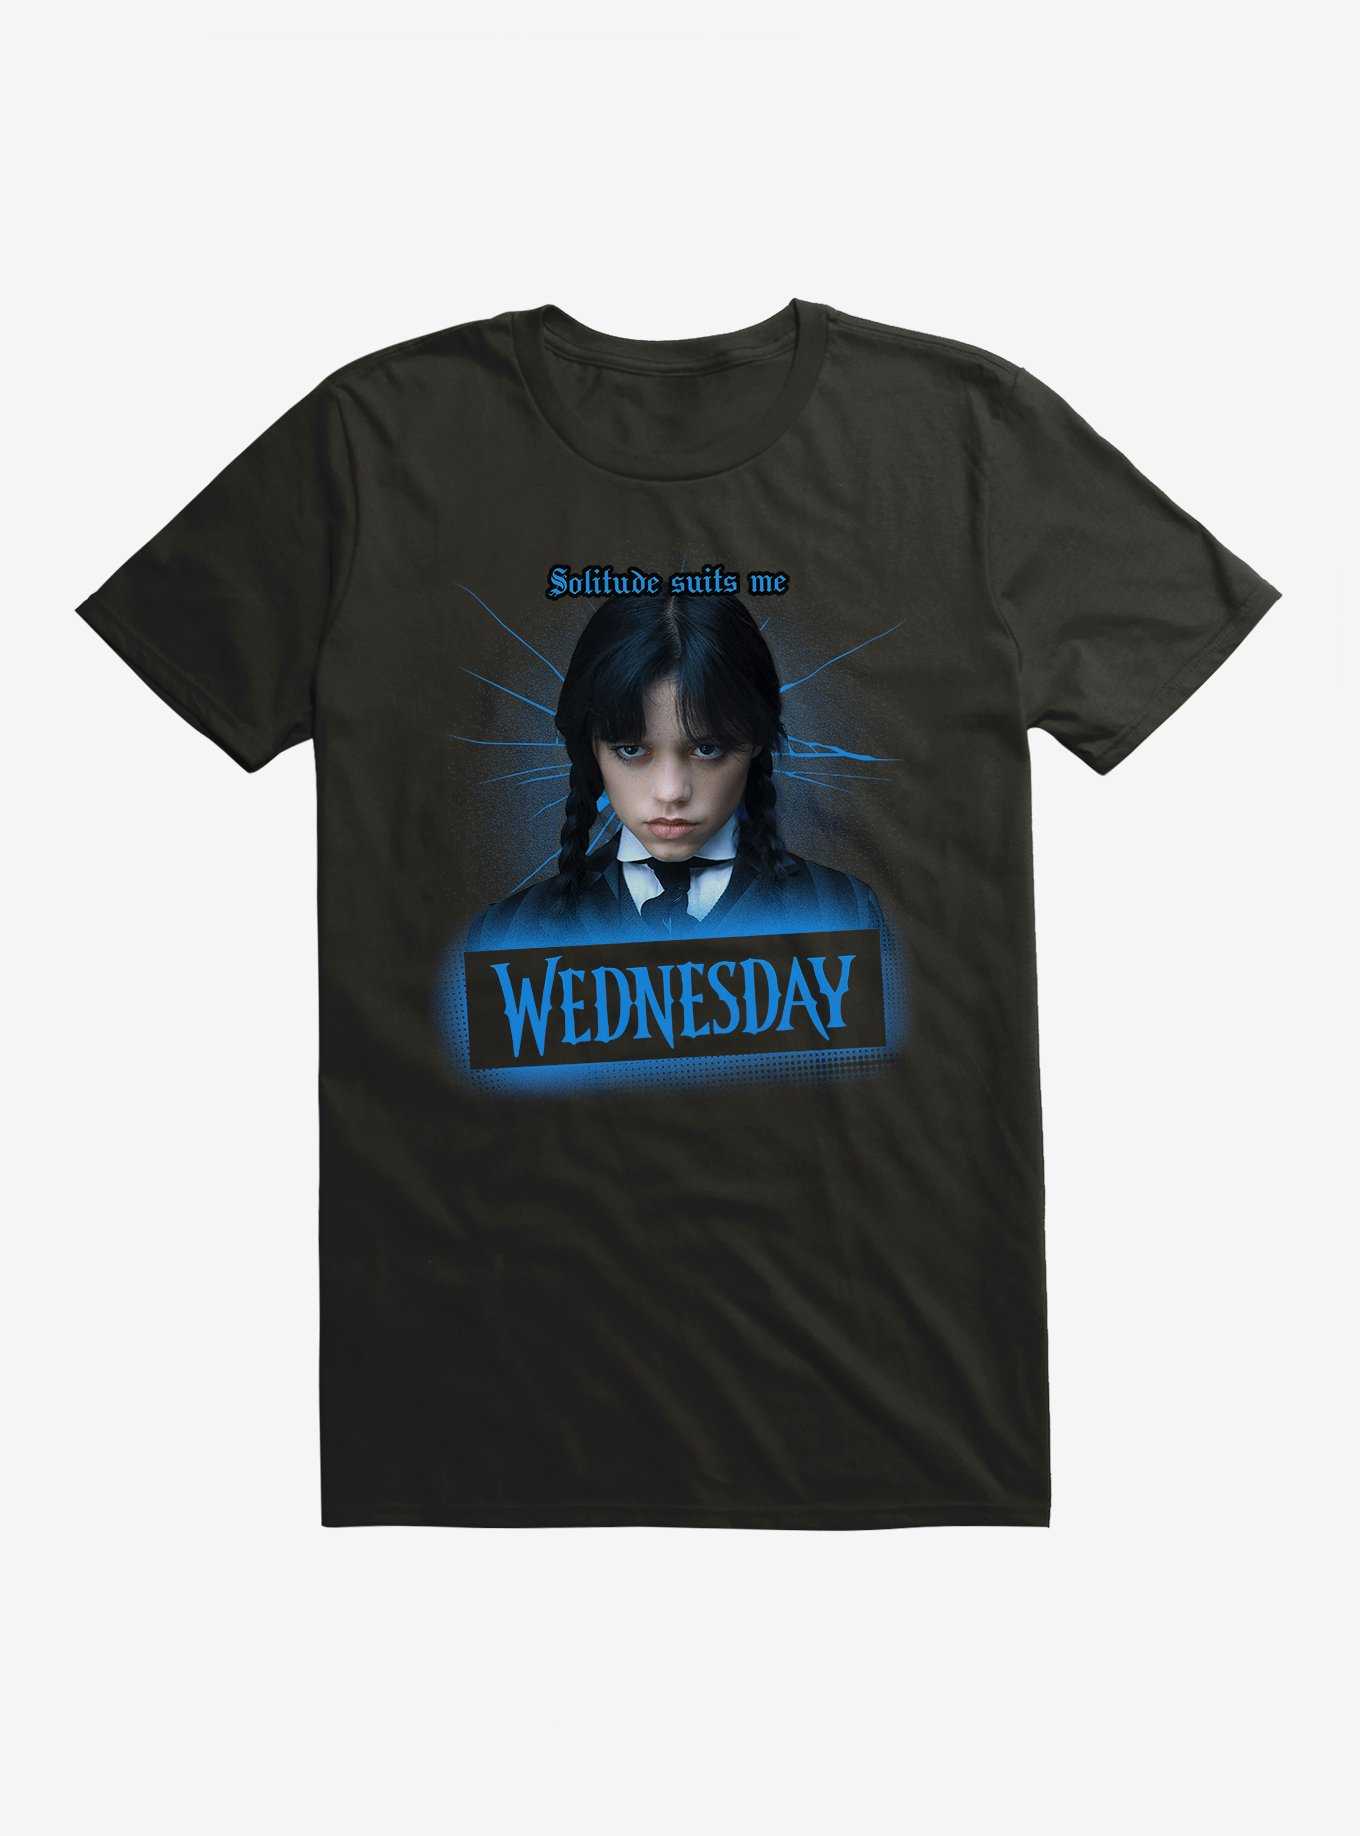 Wednesday Solitude Suits Me T-Shirt, , hi-res